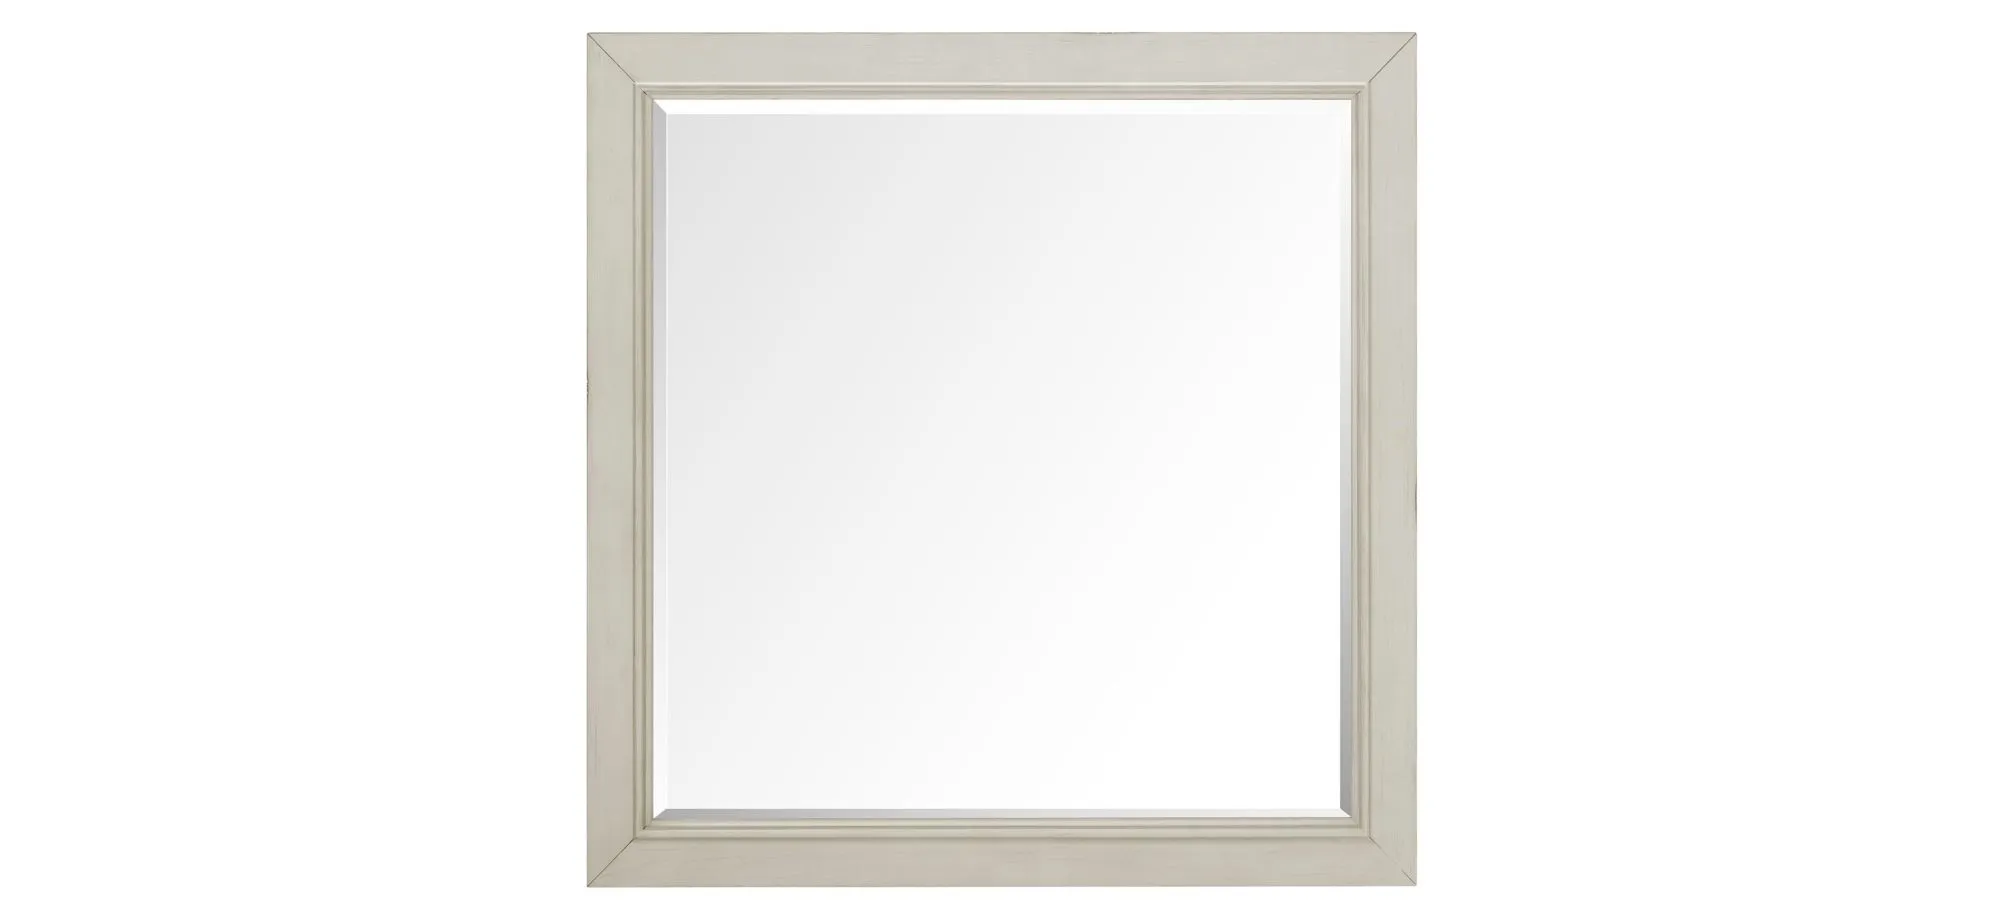 Bexley Mirror in White by Davis Intl.